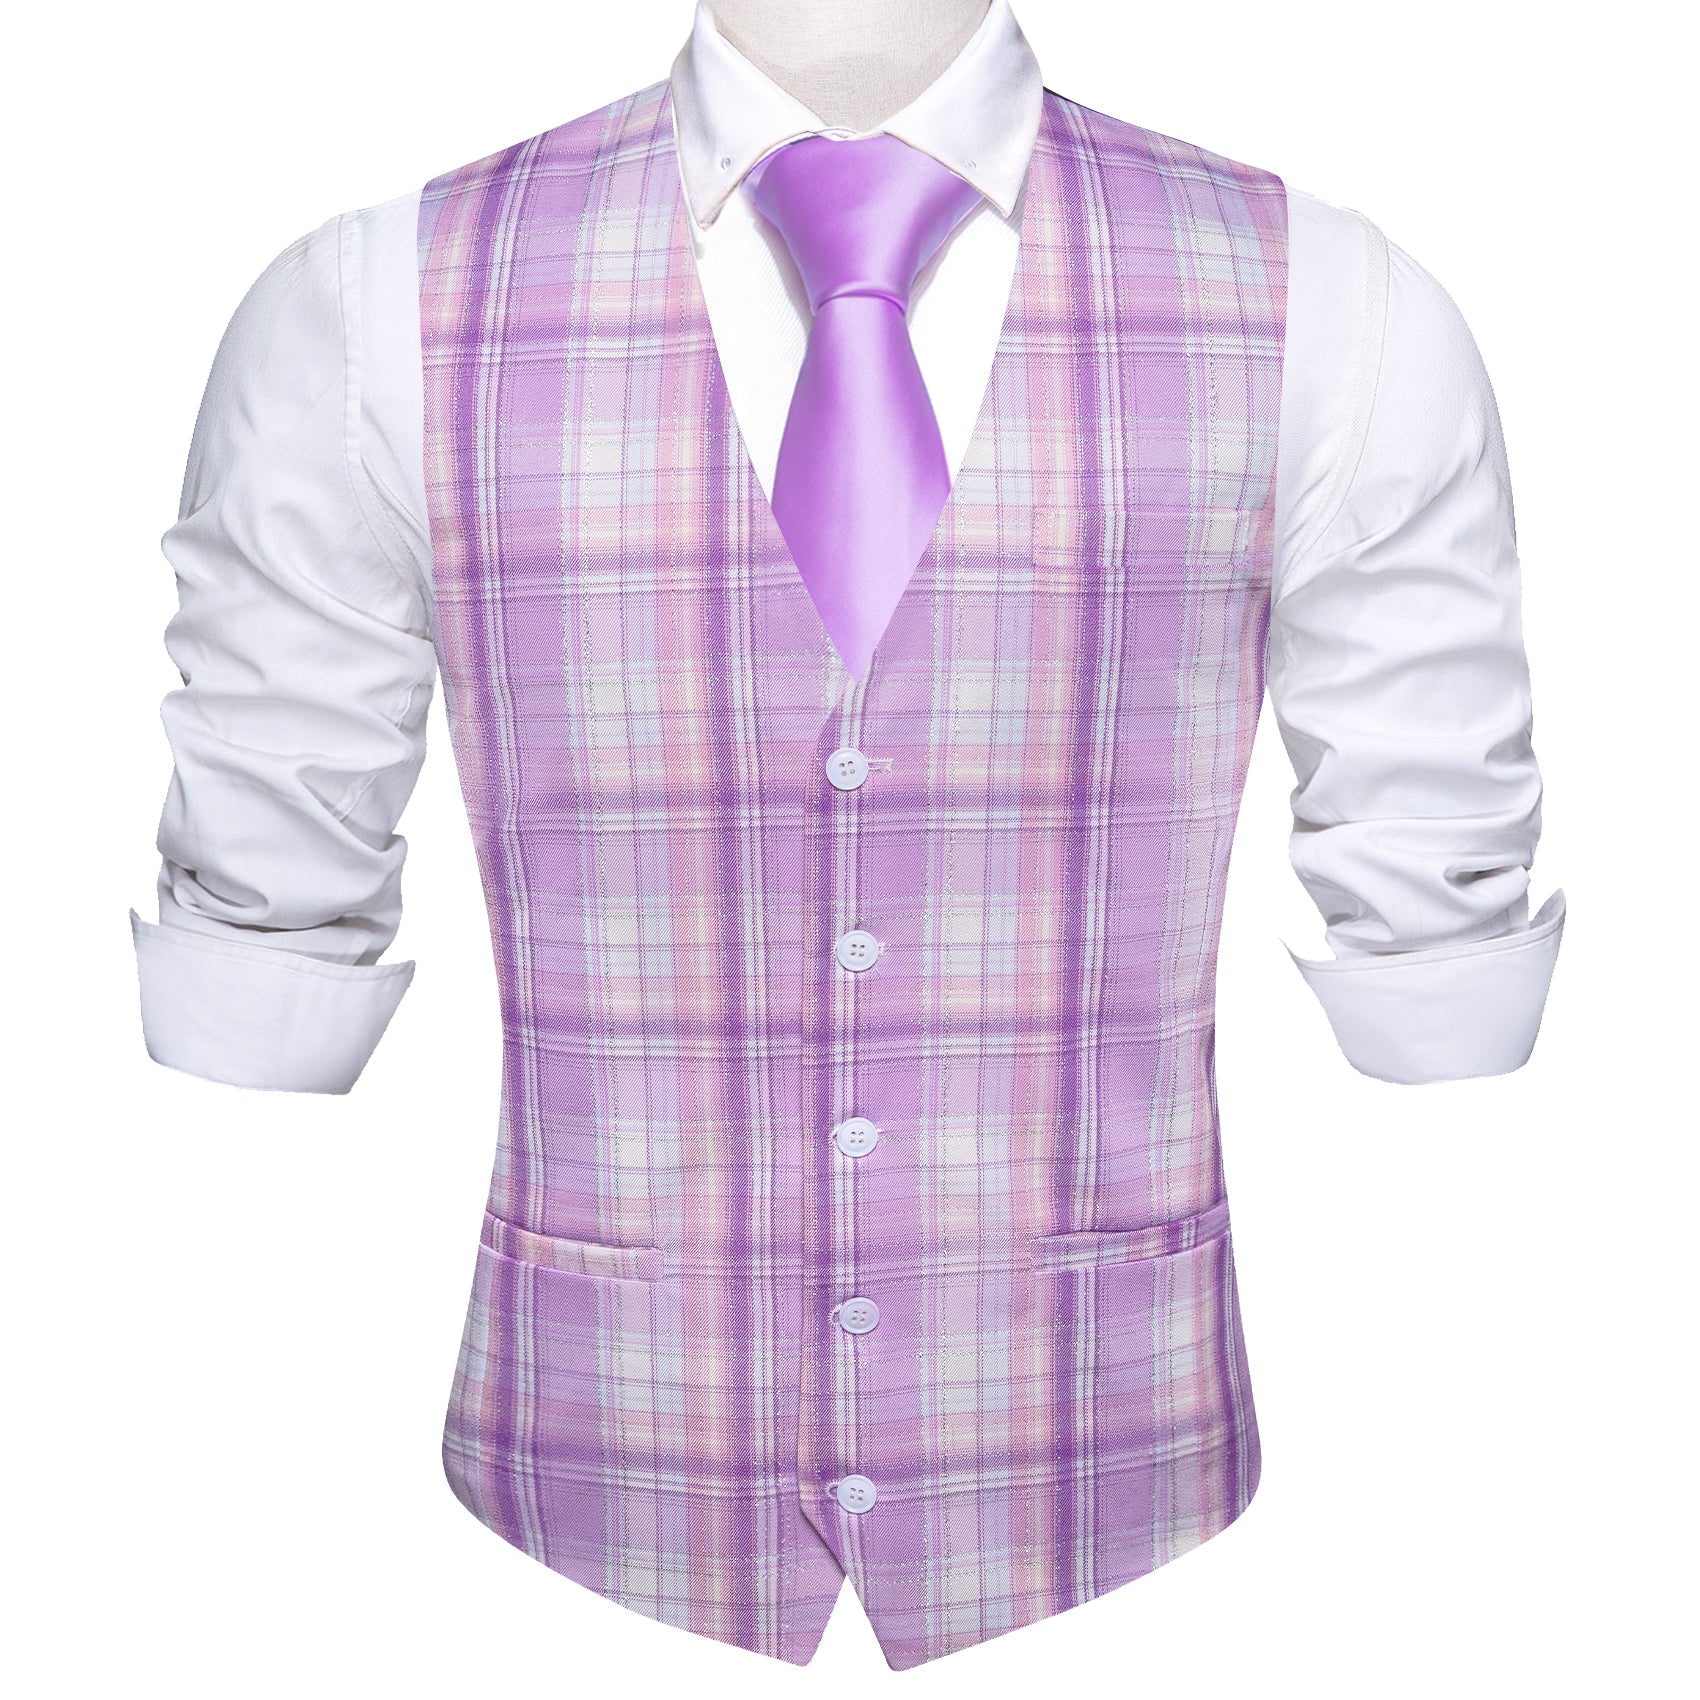 Barry.wang Pink Purple Plaid Waistcoat Vest